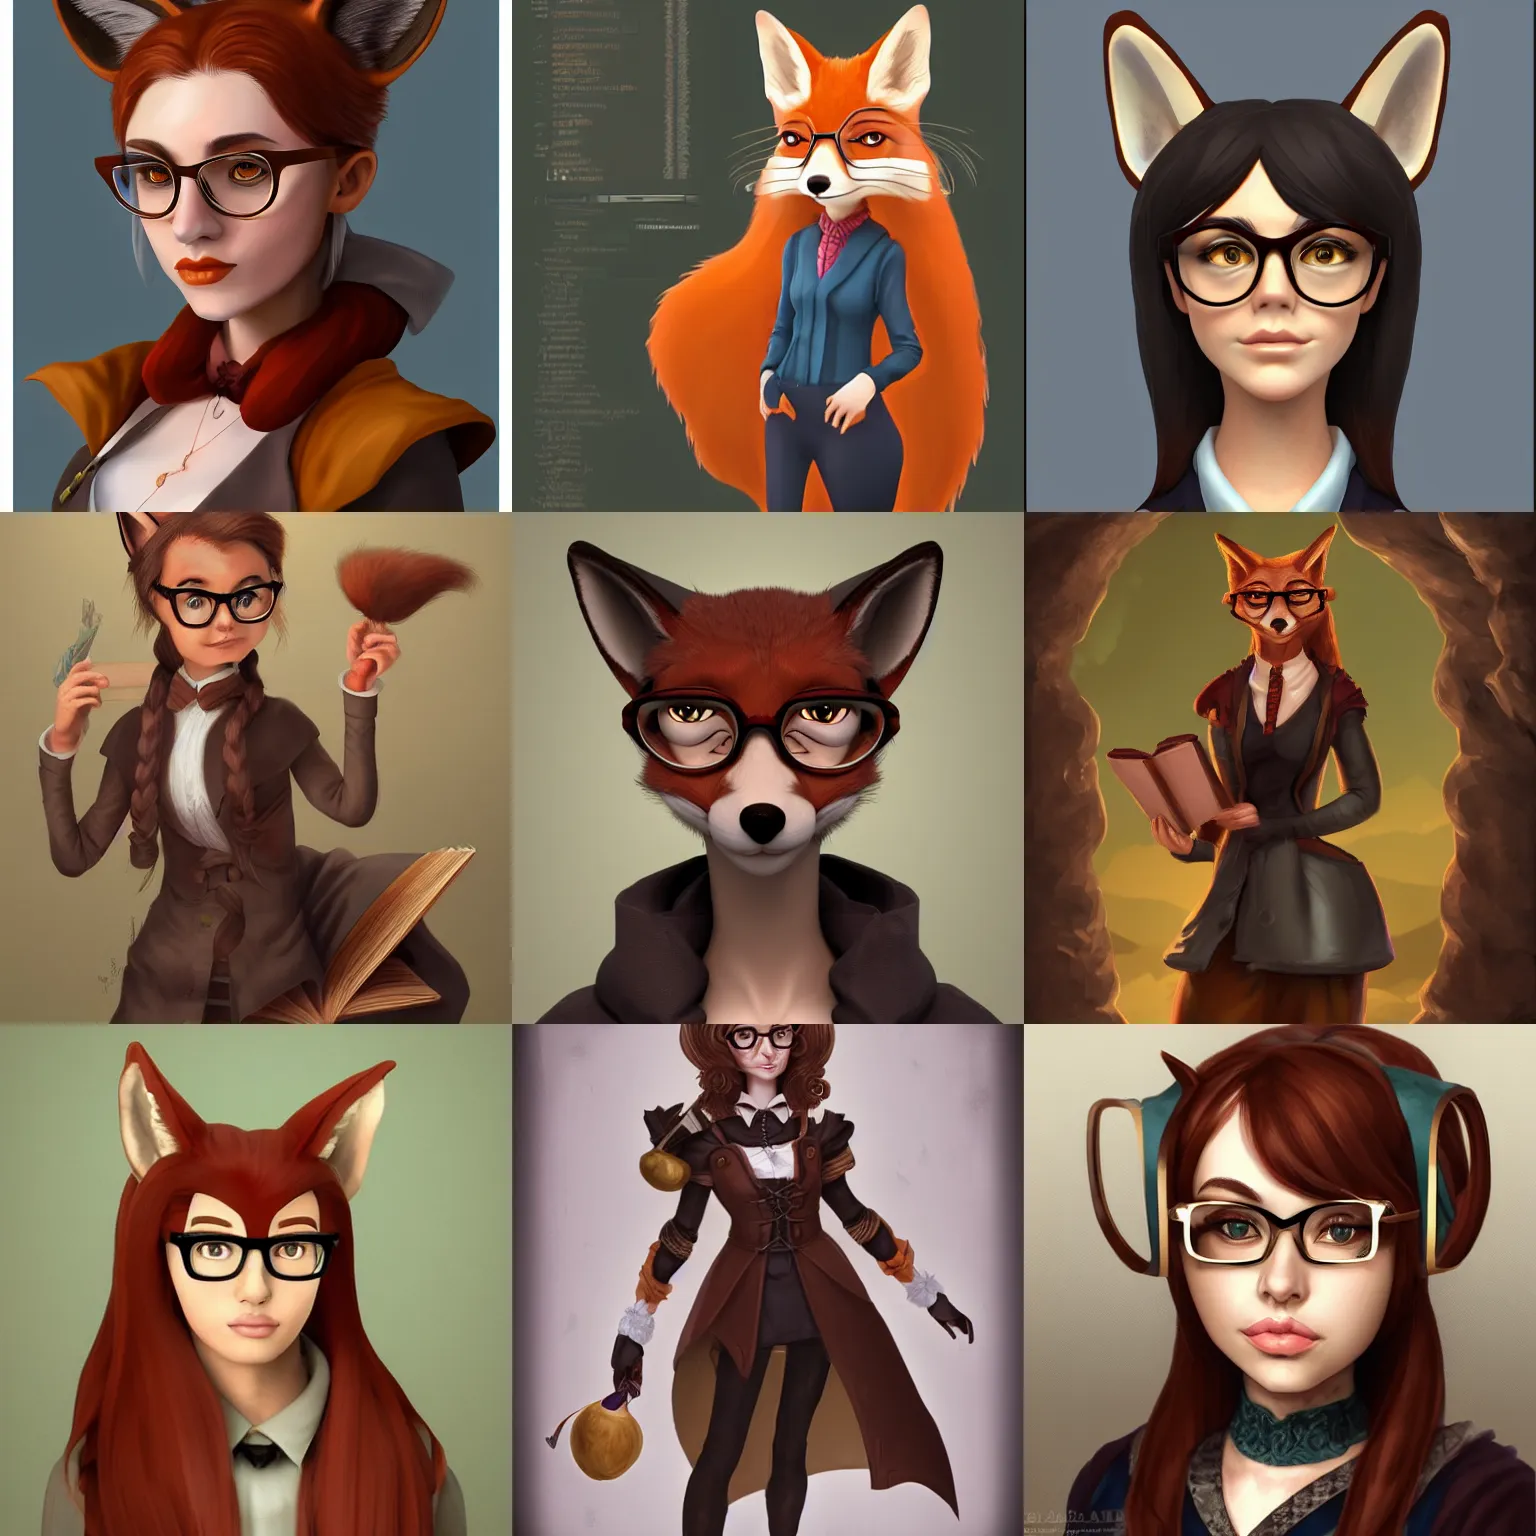 Prompt: studious librarian fox fantasy character, portrait trending on artstation